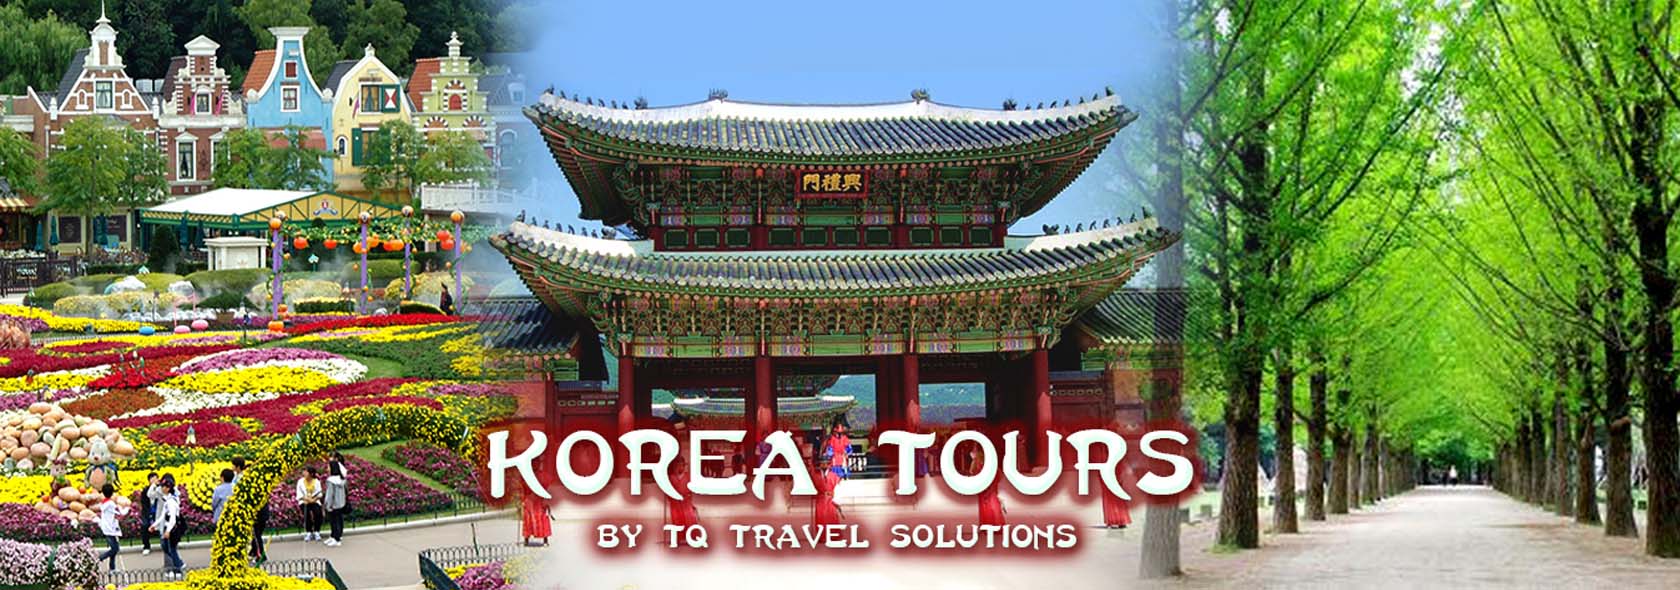 aboex travel and tours korea